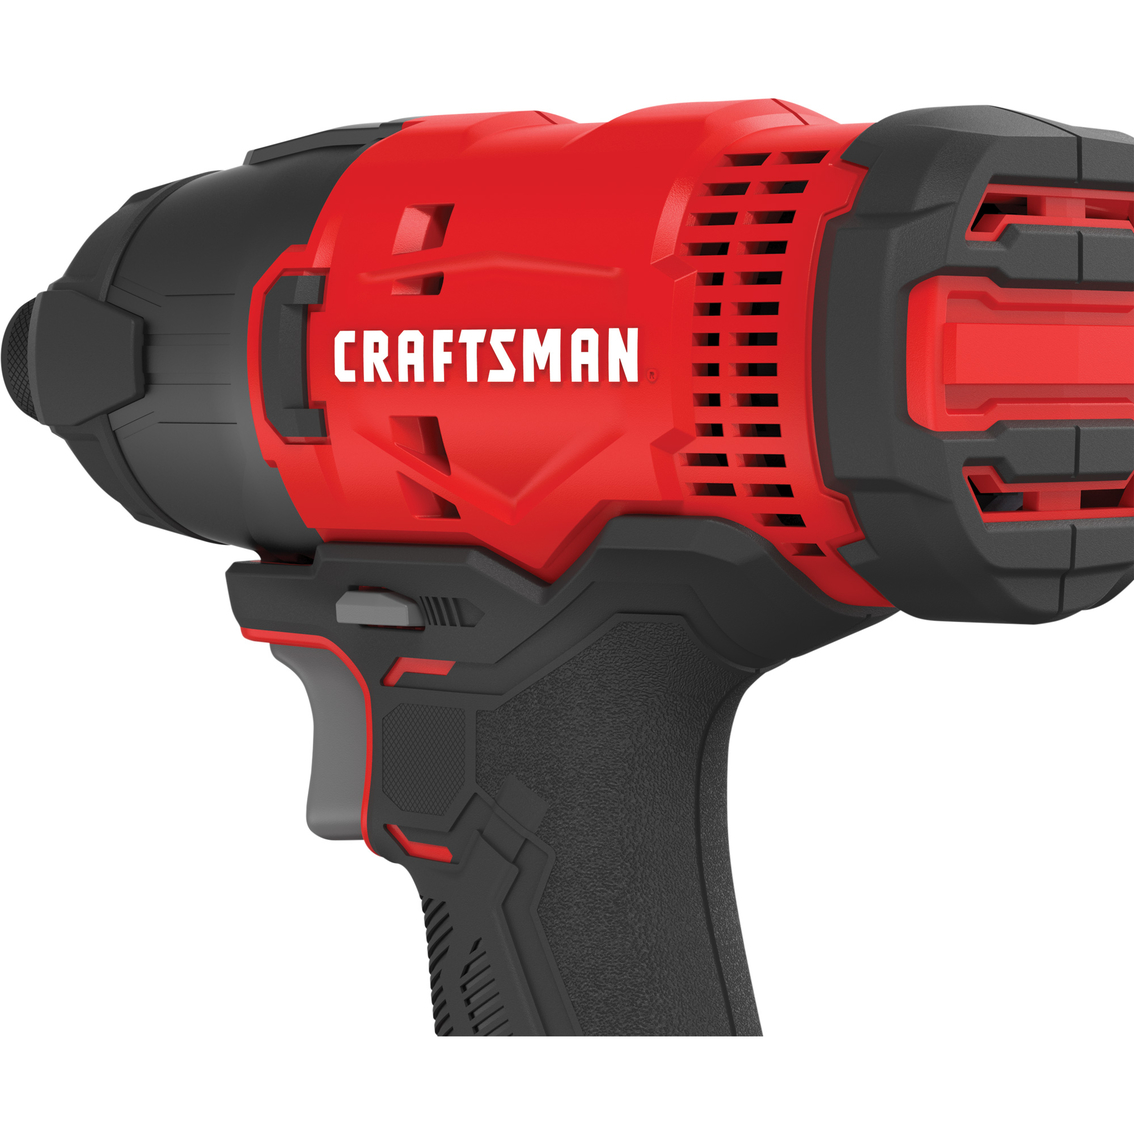 Craftsman V20 2 Tool Combo Kit - Image 4 of 6